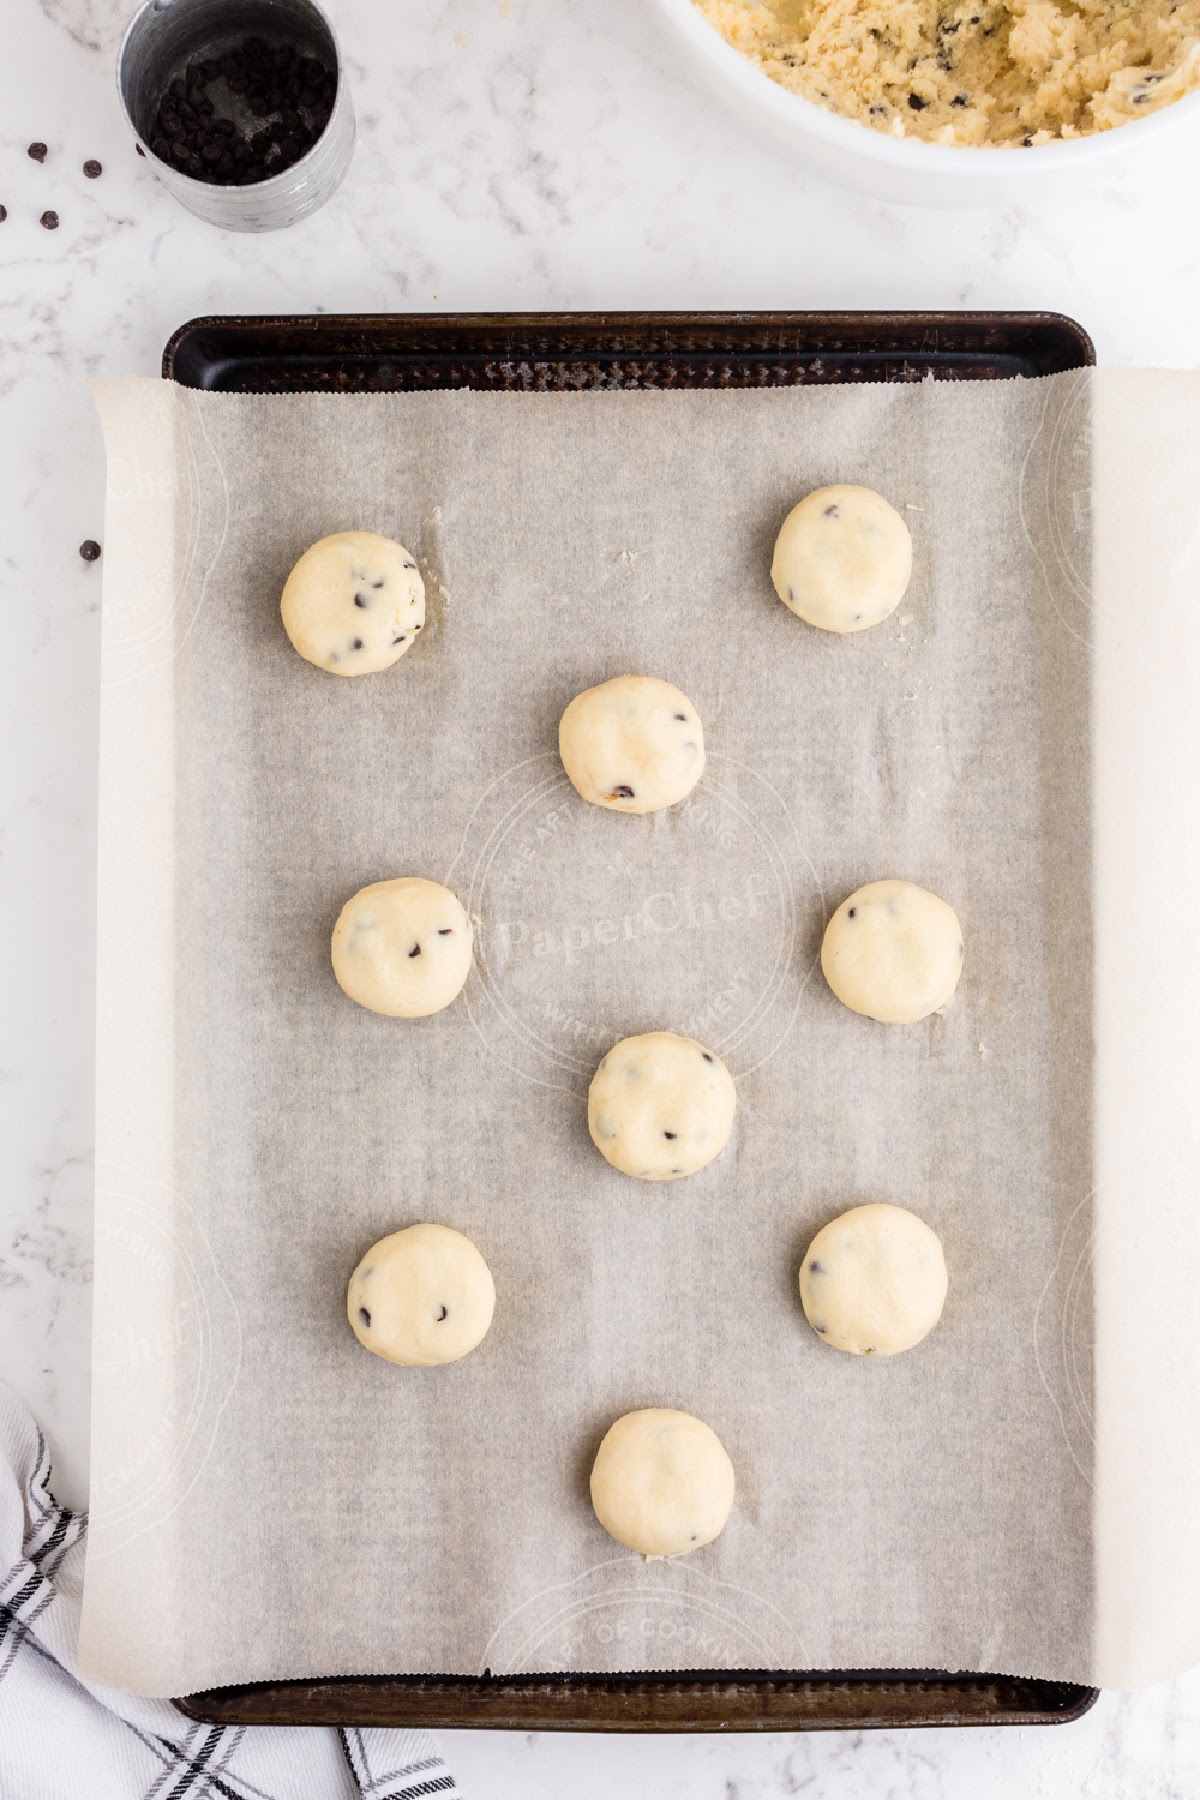 Sheet pan of slightly flattened balls of cookie dough.